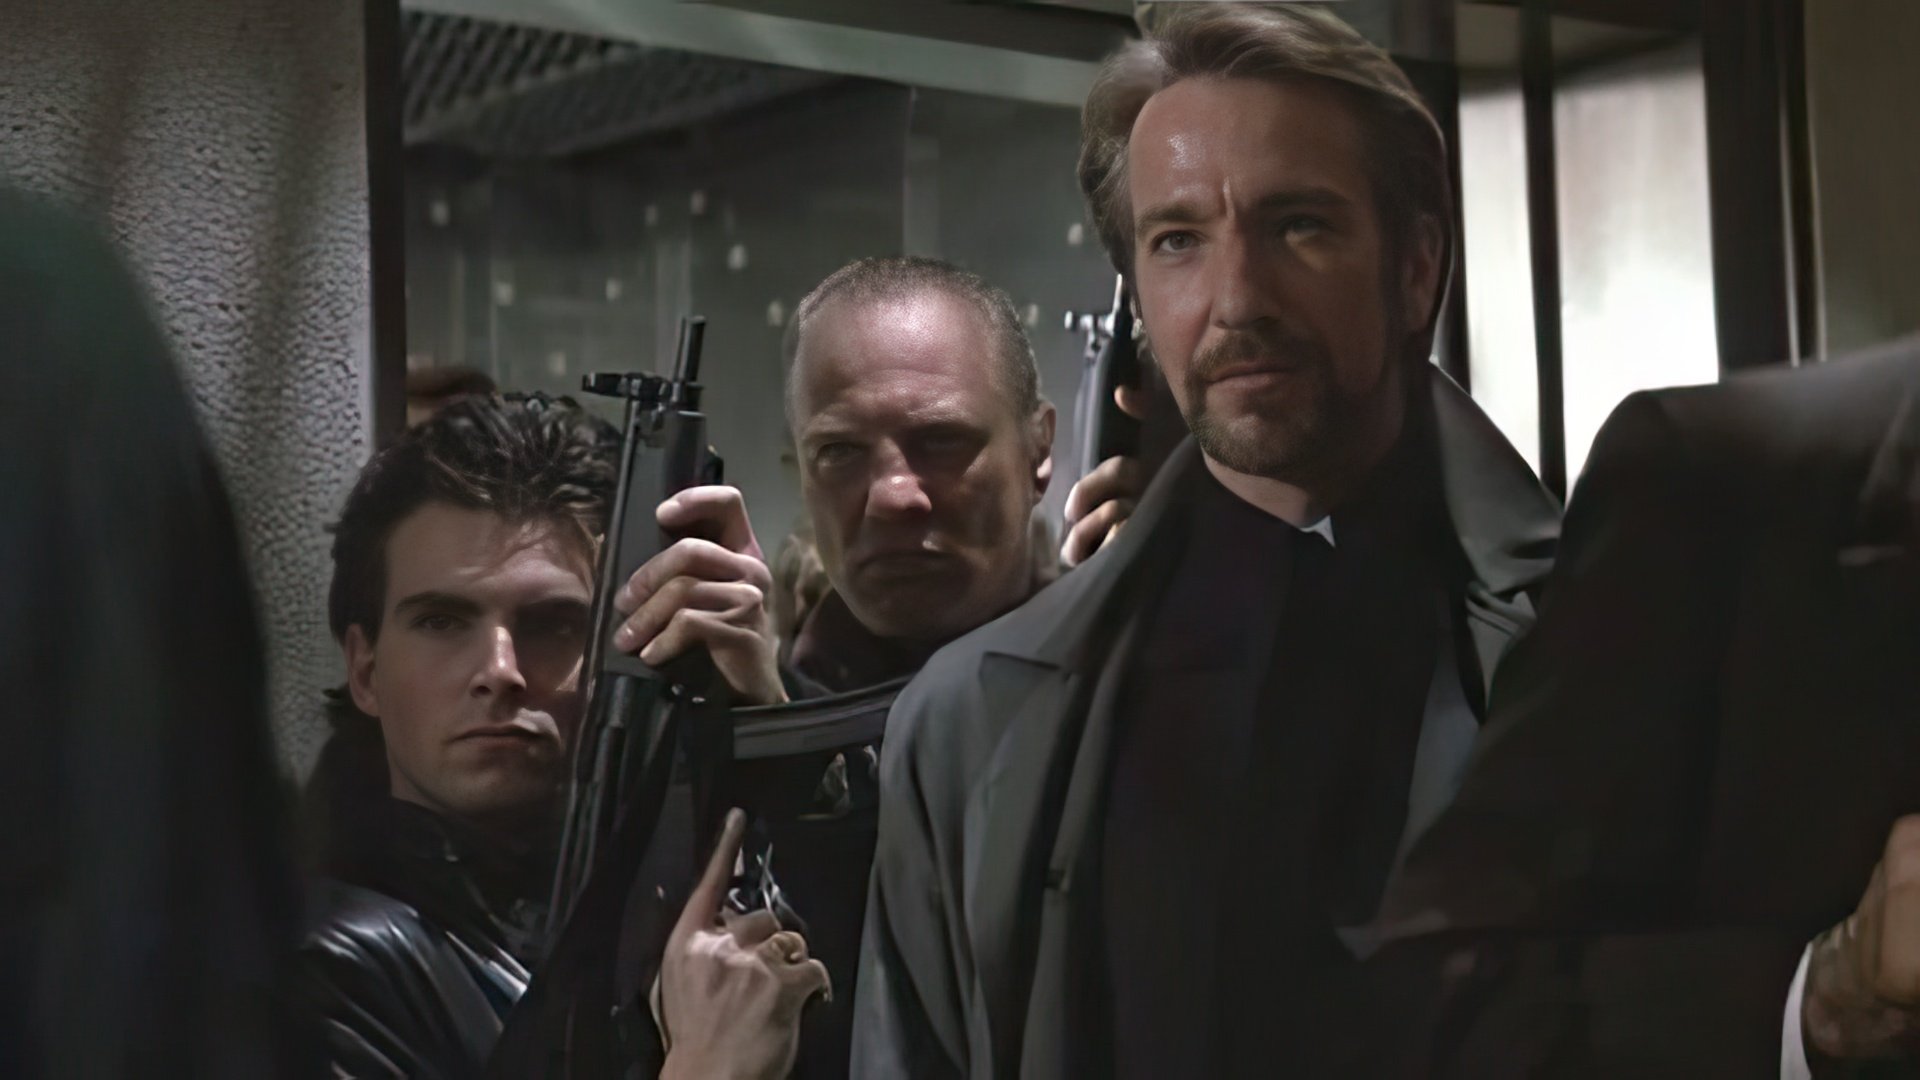 Alan Rickman in the movie 'Die Hard'